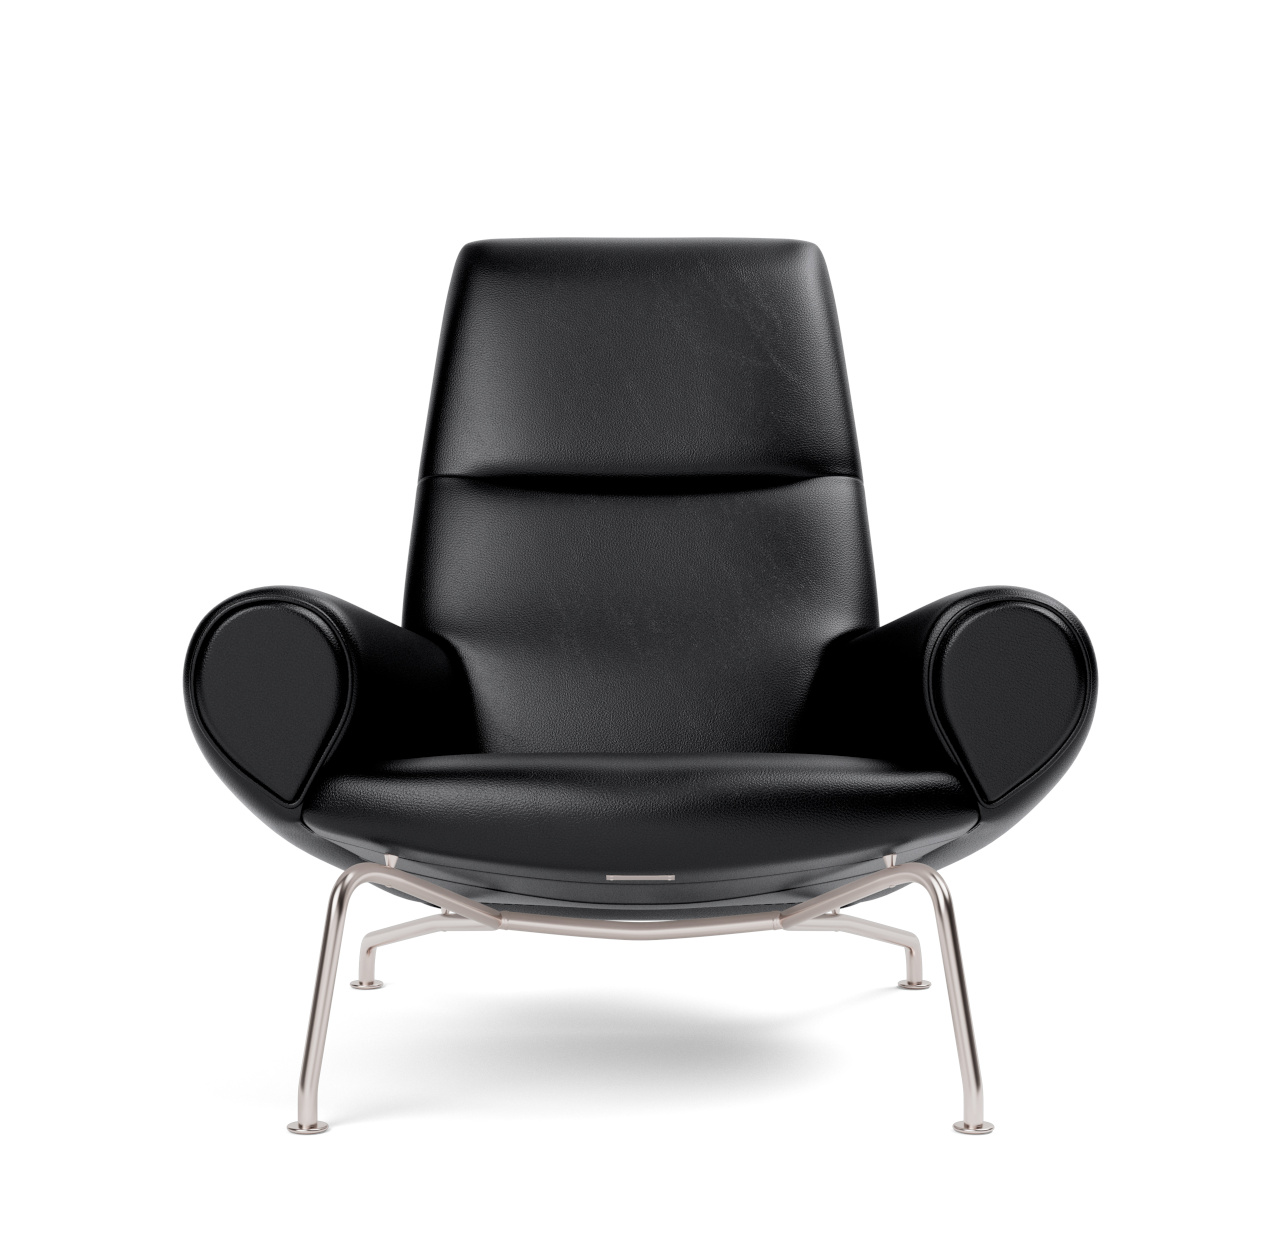 Wegner Queen Chair, brushed steel / leder primo 88 schwarz